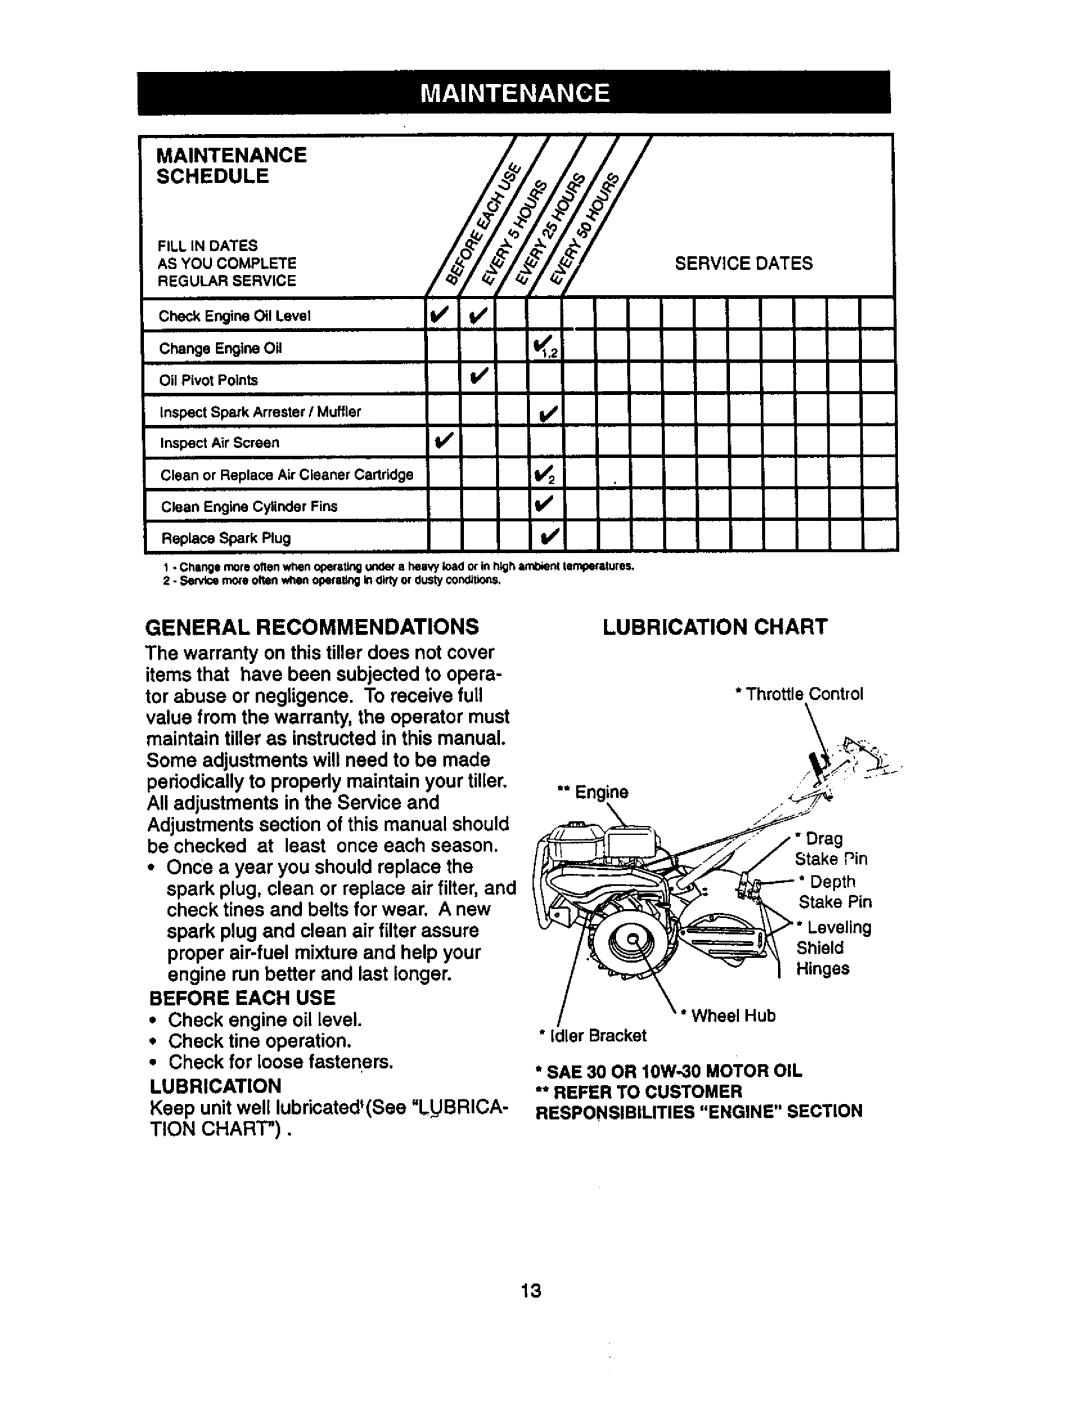 Craftsman 917.29332 owner manual ya ,, ERV,OE, FI,,,No, s, Lubrication Chart 